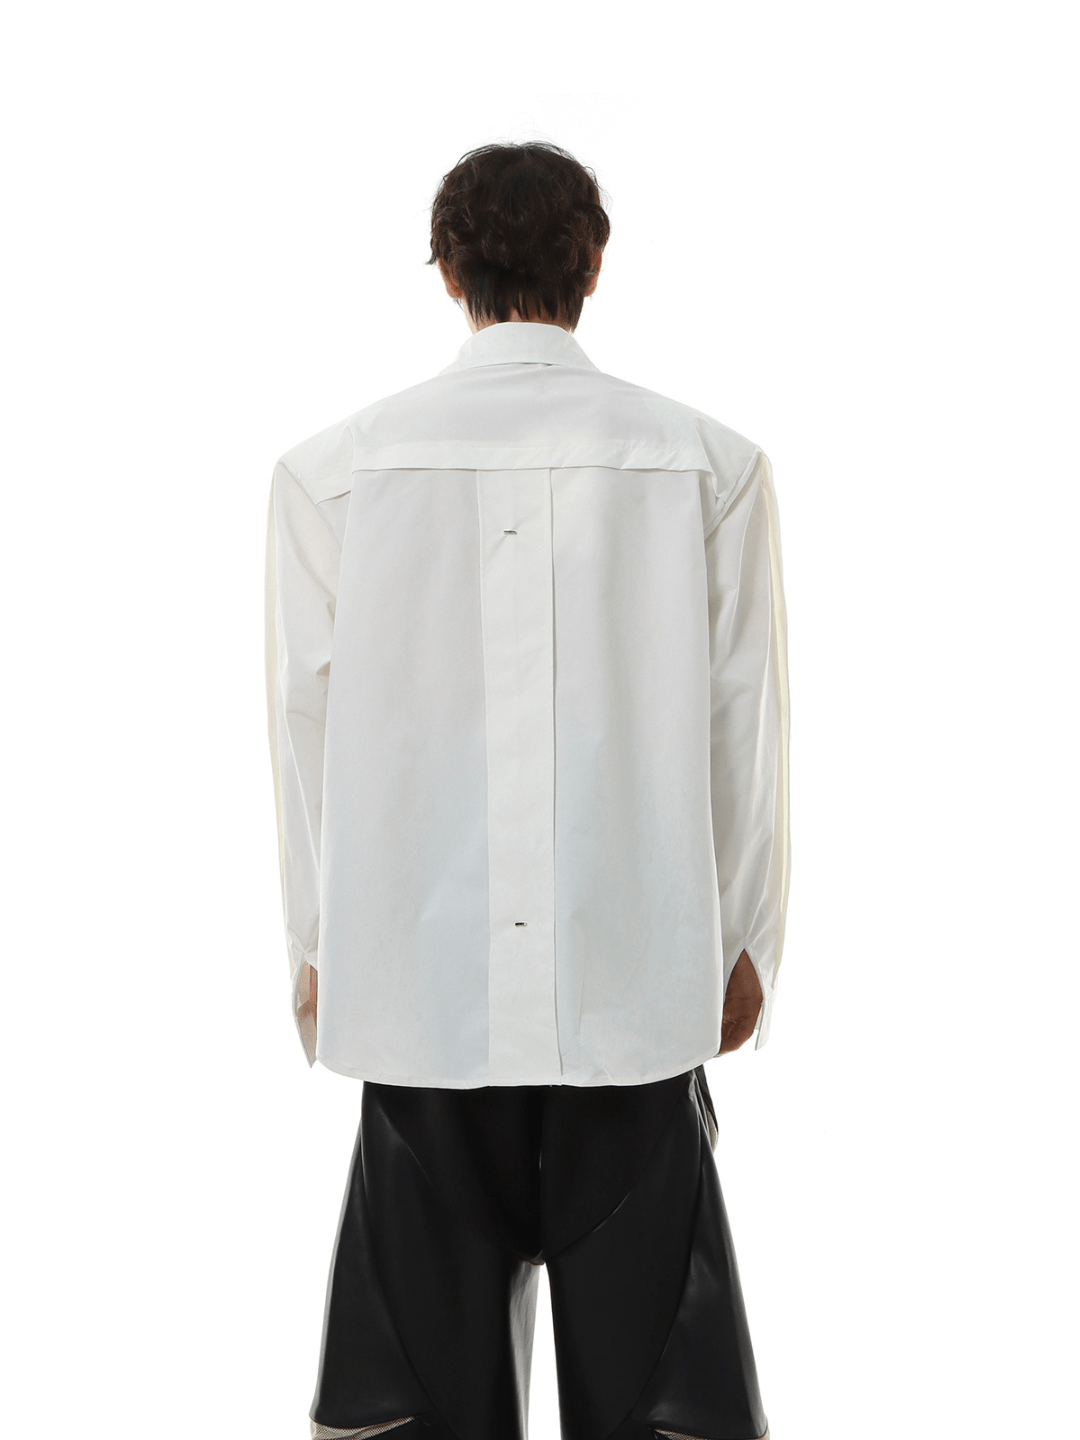 [MARTHENAUT] shoulder pads white long-sleeved shirt na991